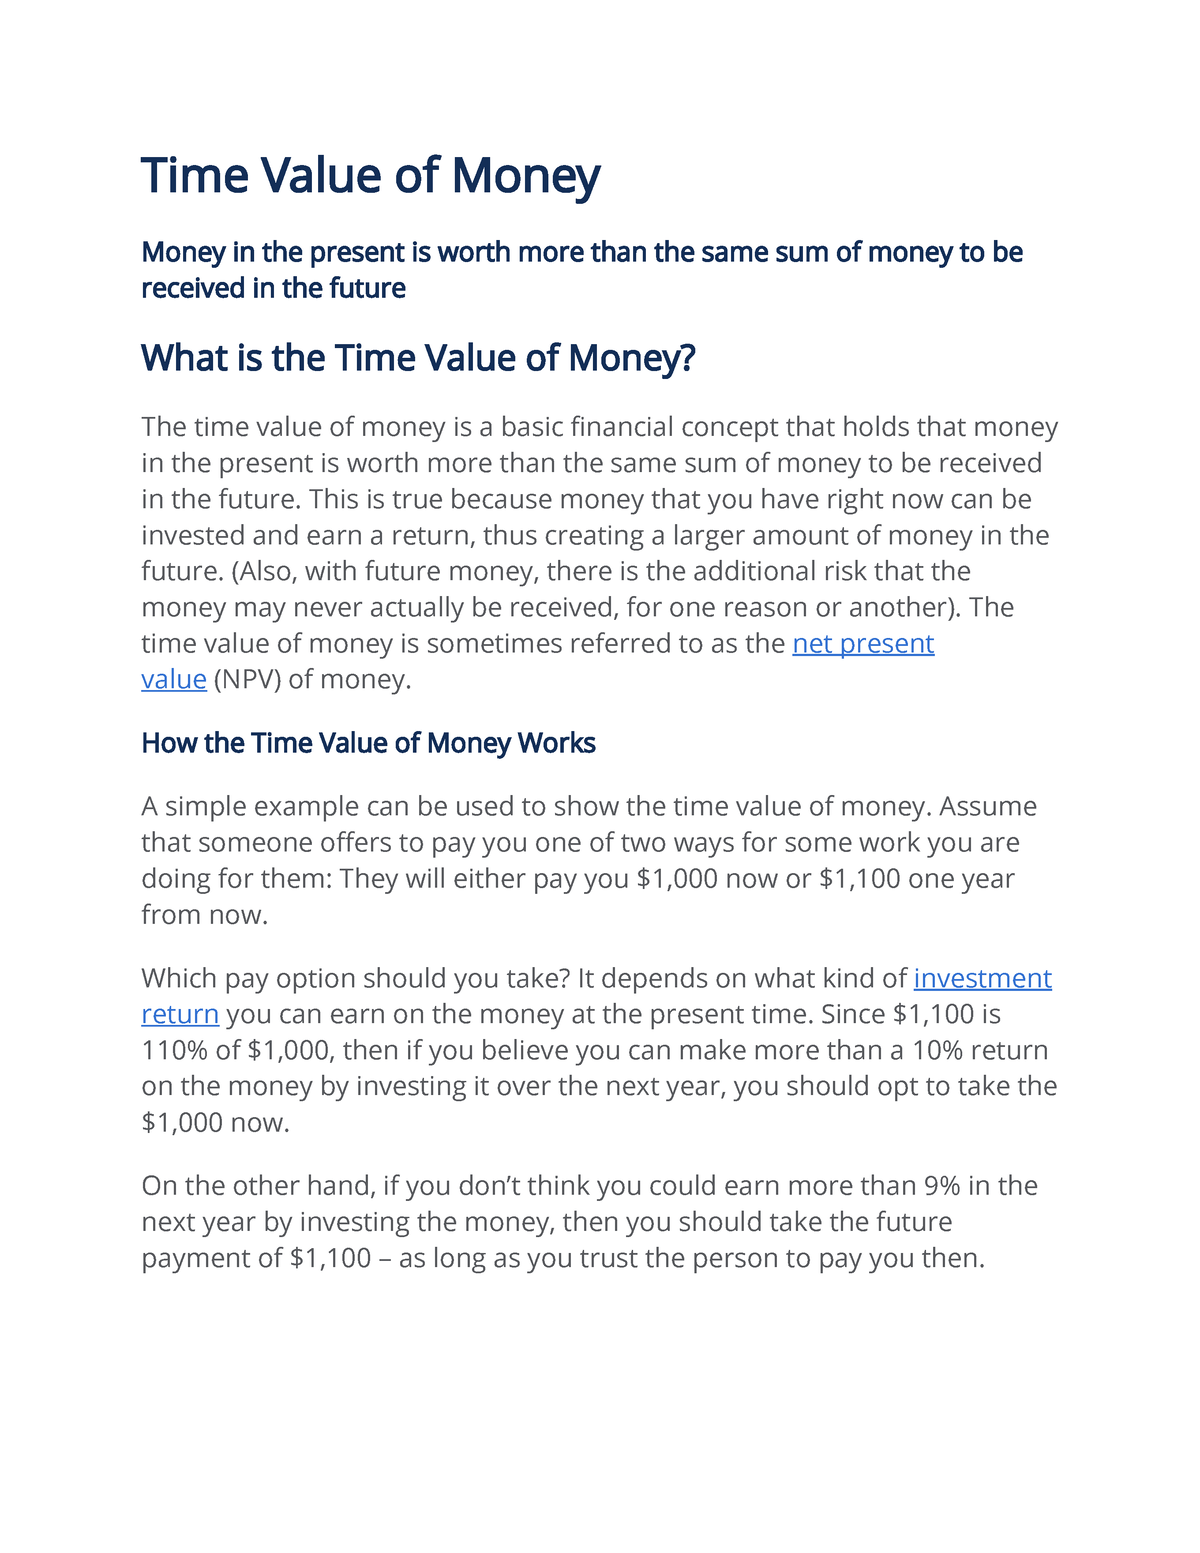 hbr case study time value of money